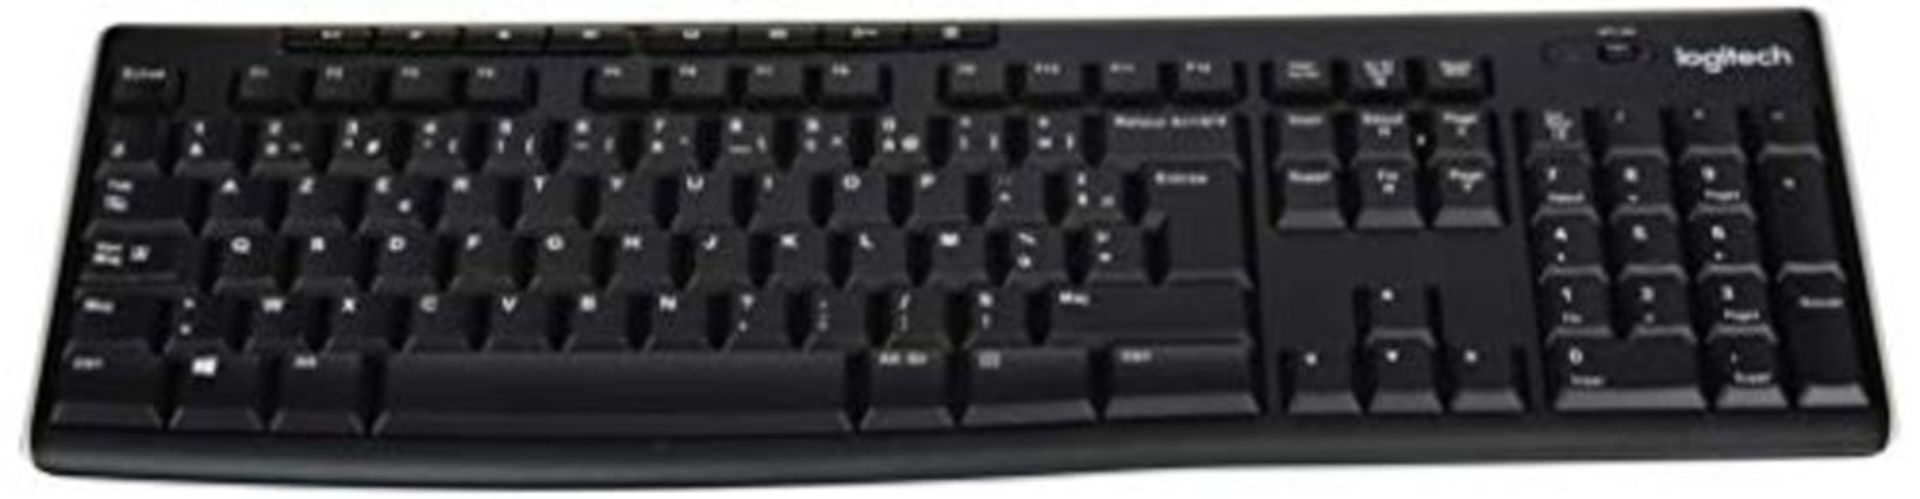 [INCOMPLETE] Logitech K270 Wireless Keyboard, AZERTY French Layout - Black